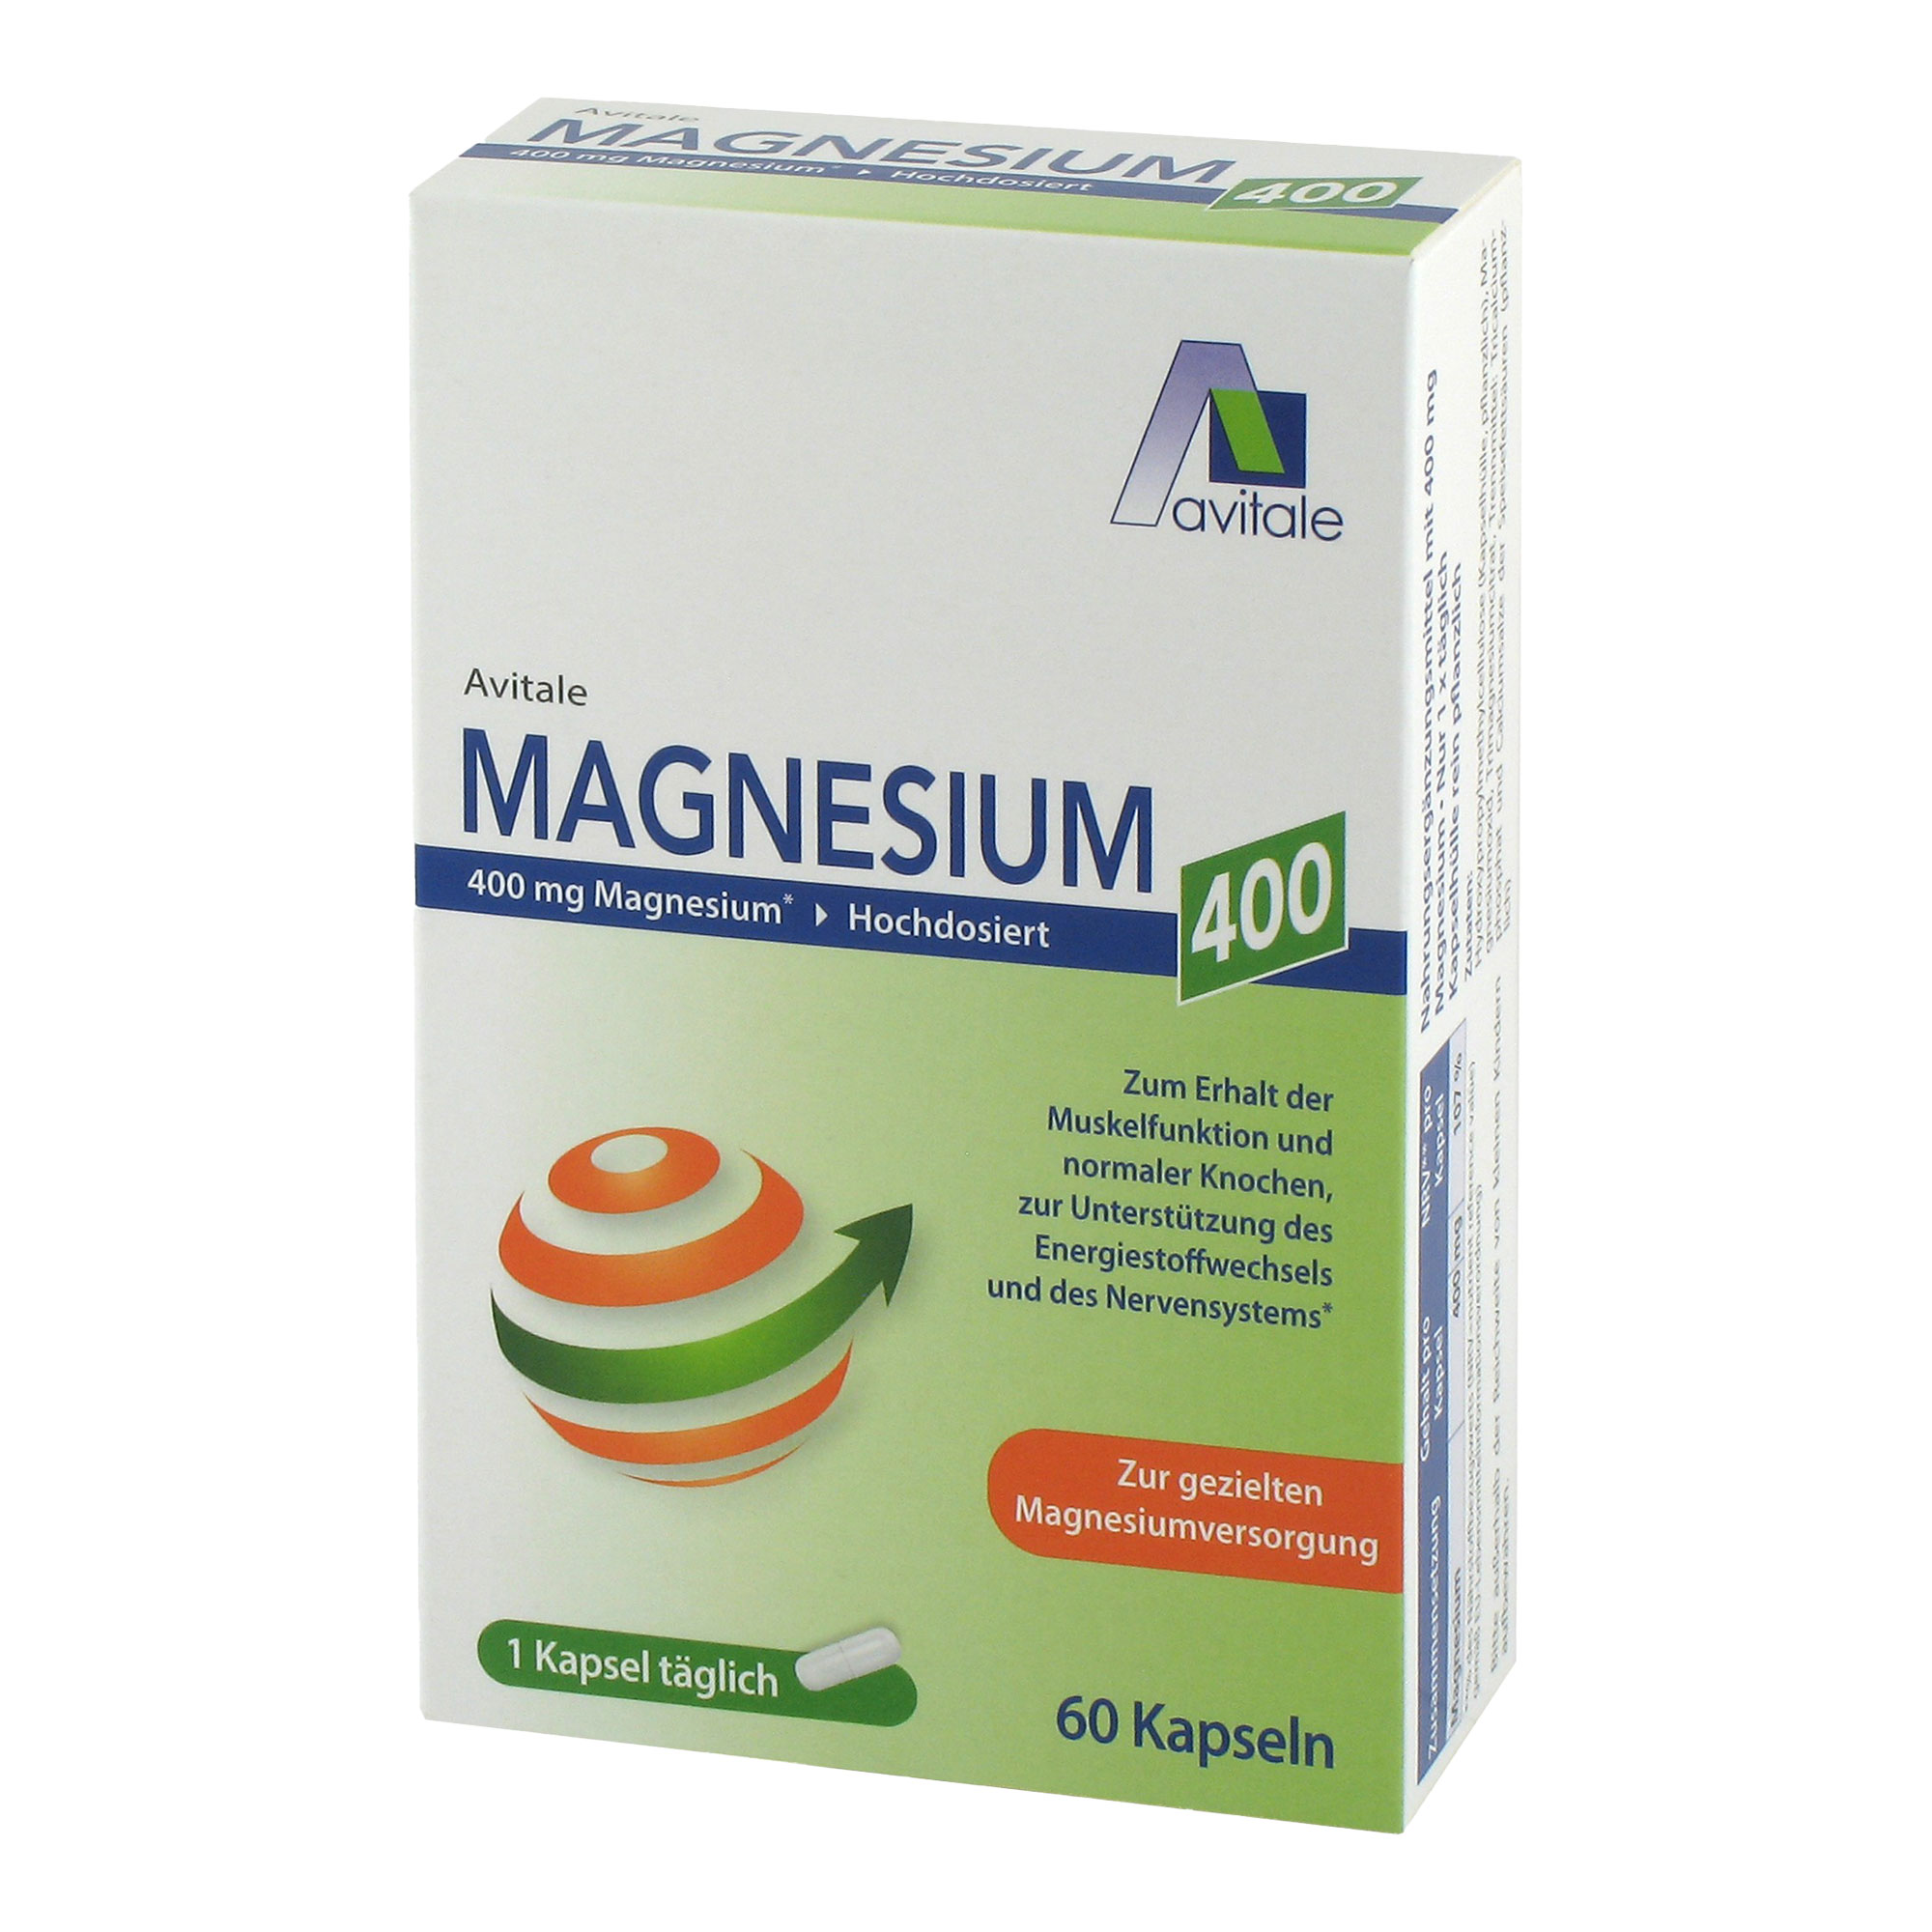 Nahrungsergänzungsmittel mit 400 mg Magnesium.